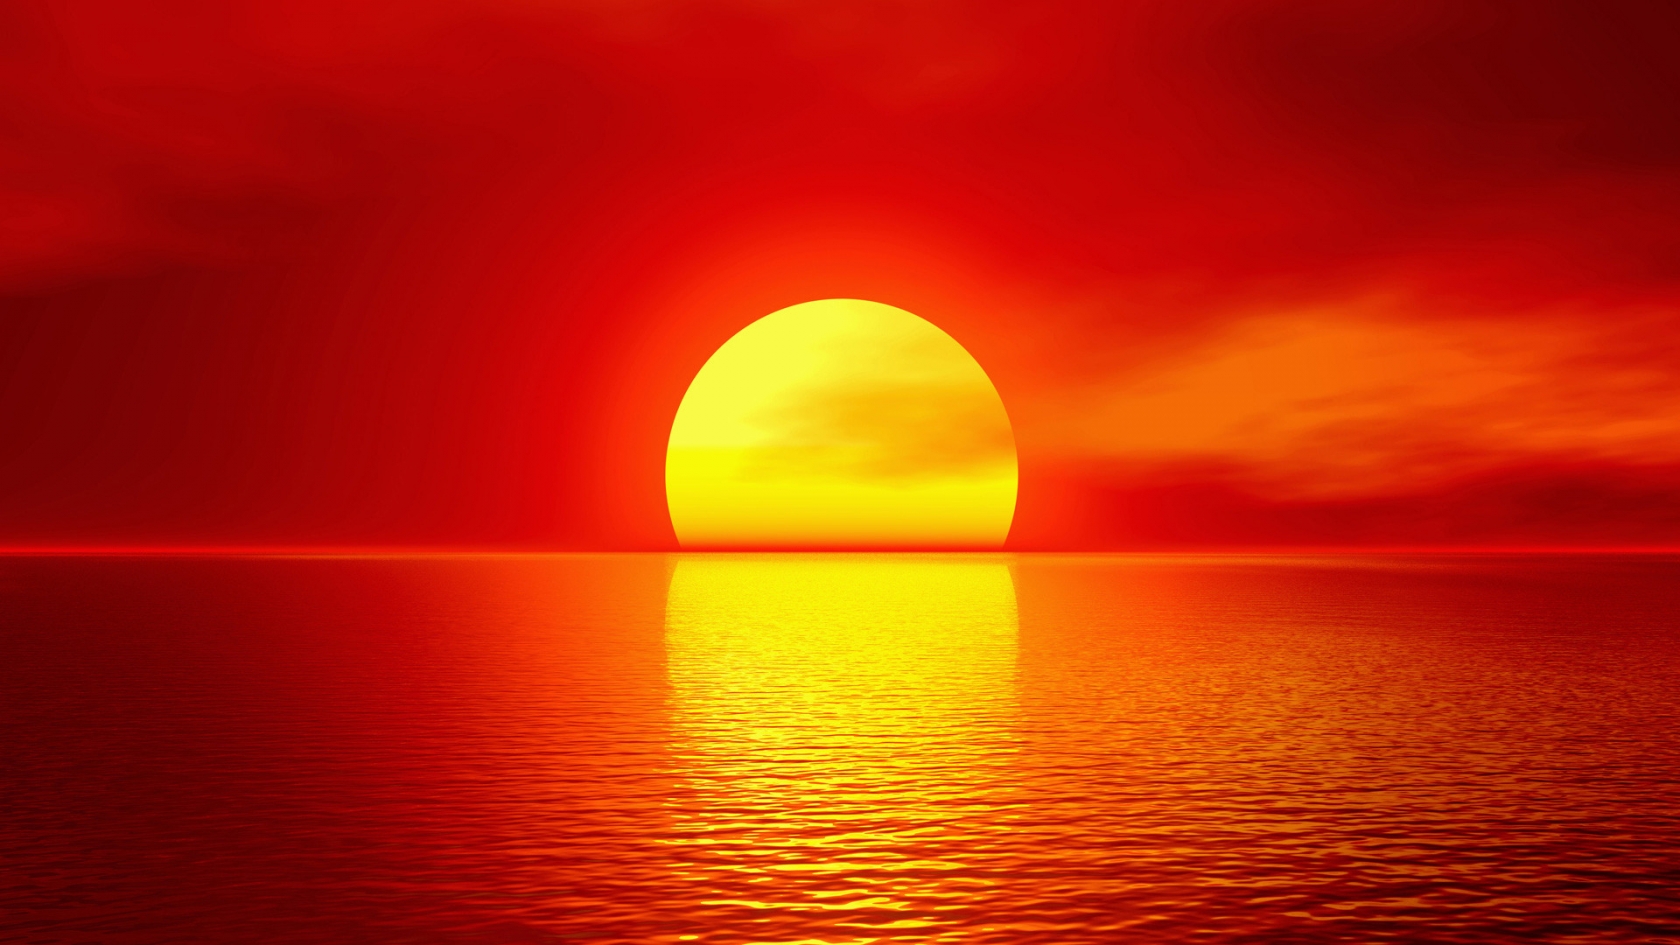 Amazing Summer Sunset for 1680 x 945 HDTV resolution